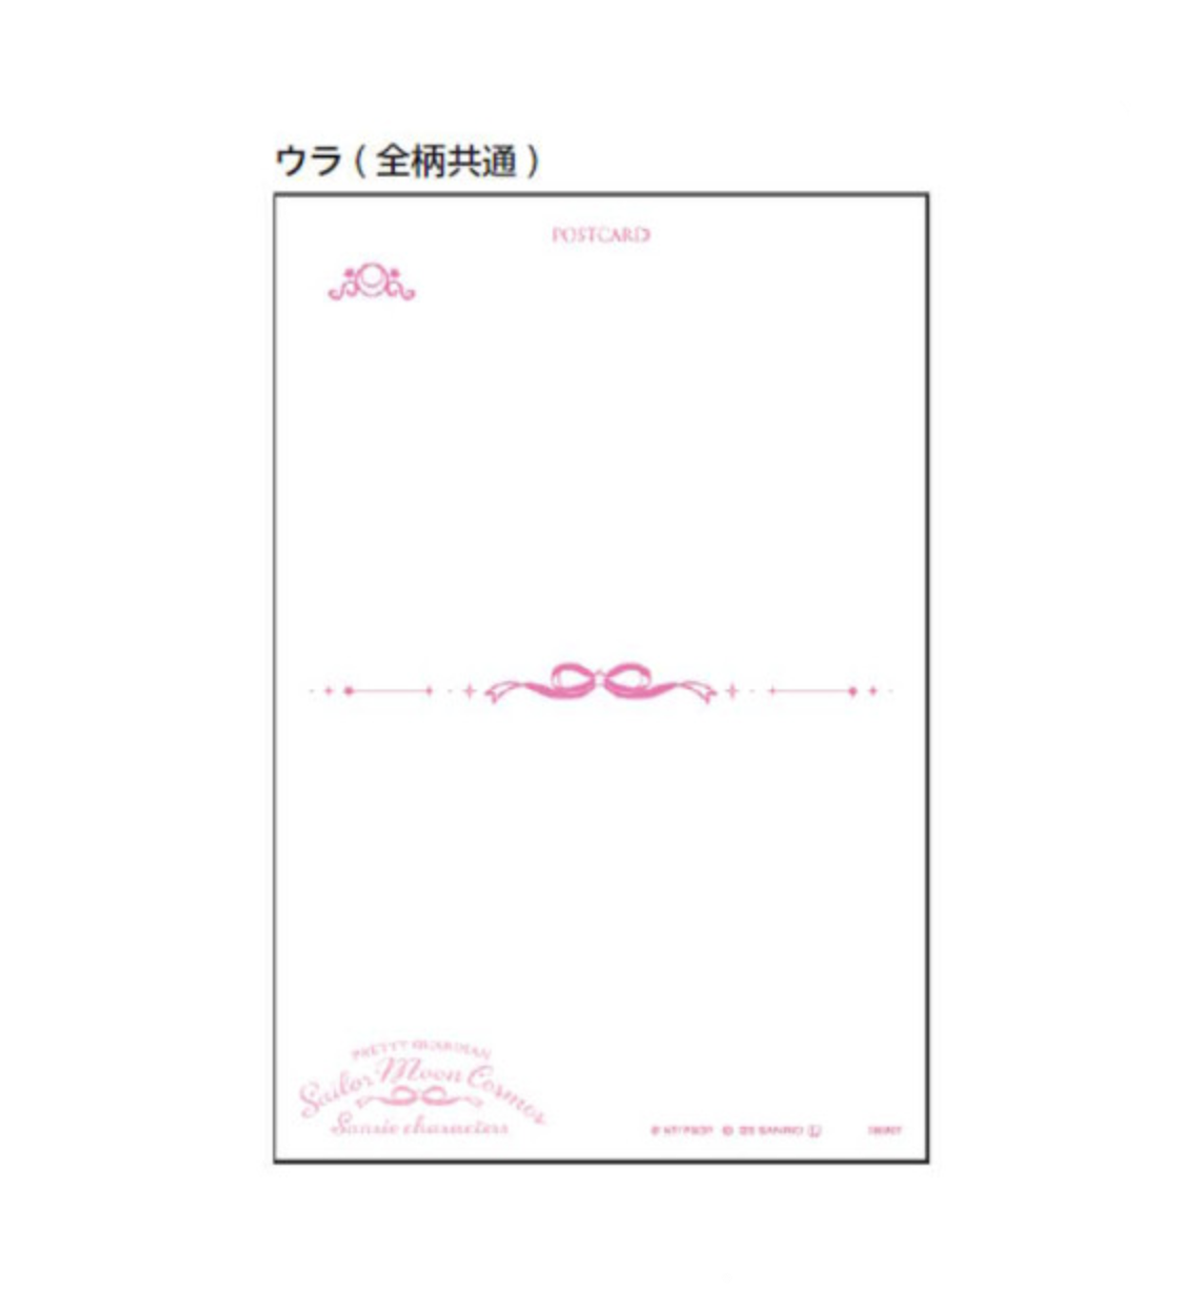 Sailor Moon x Sanrio Postcards [Inner Guardians & Star Lights]